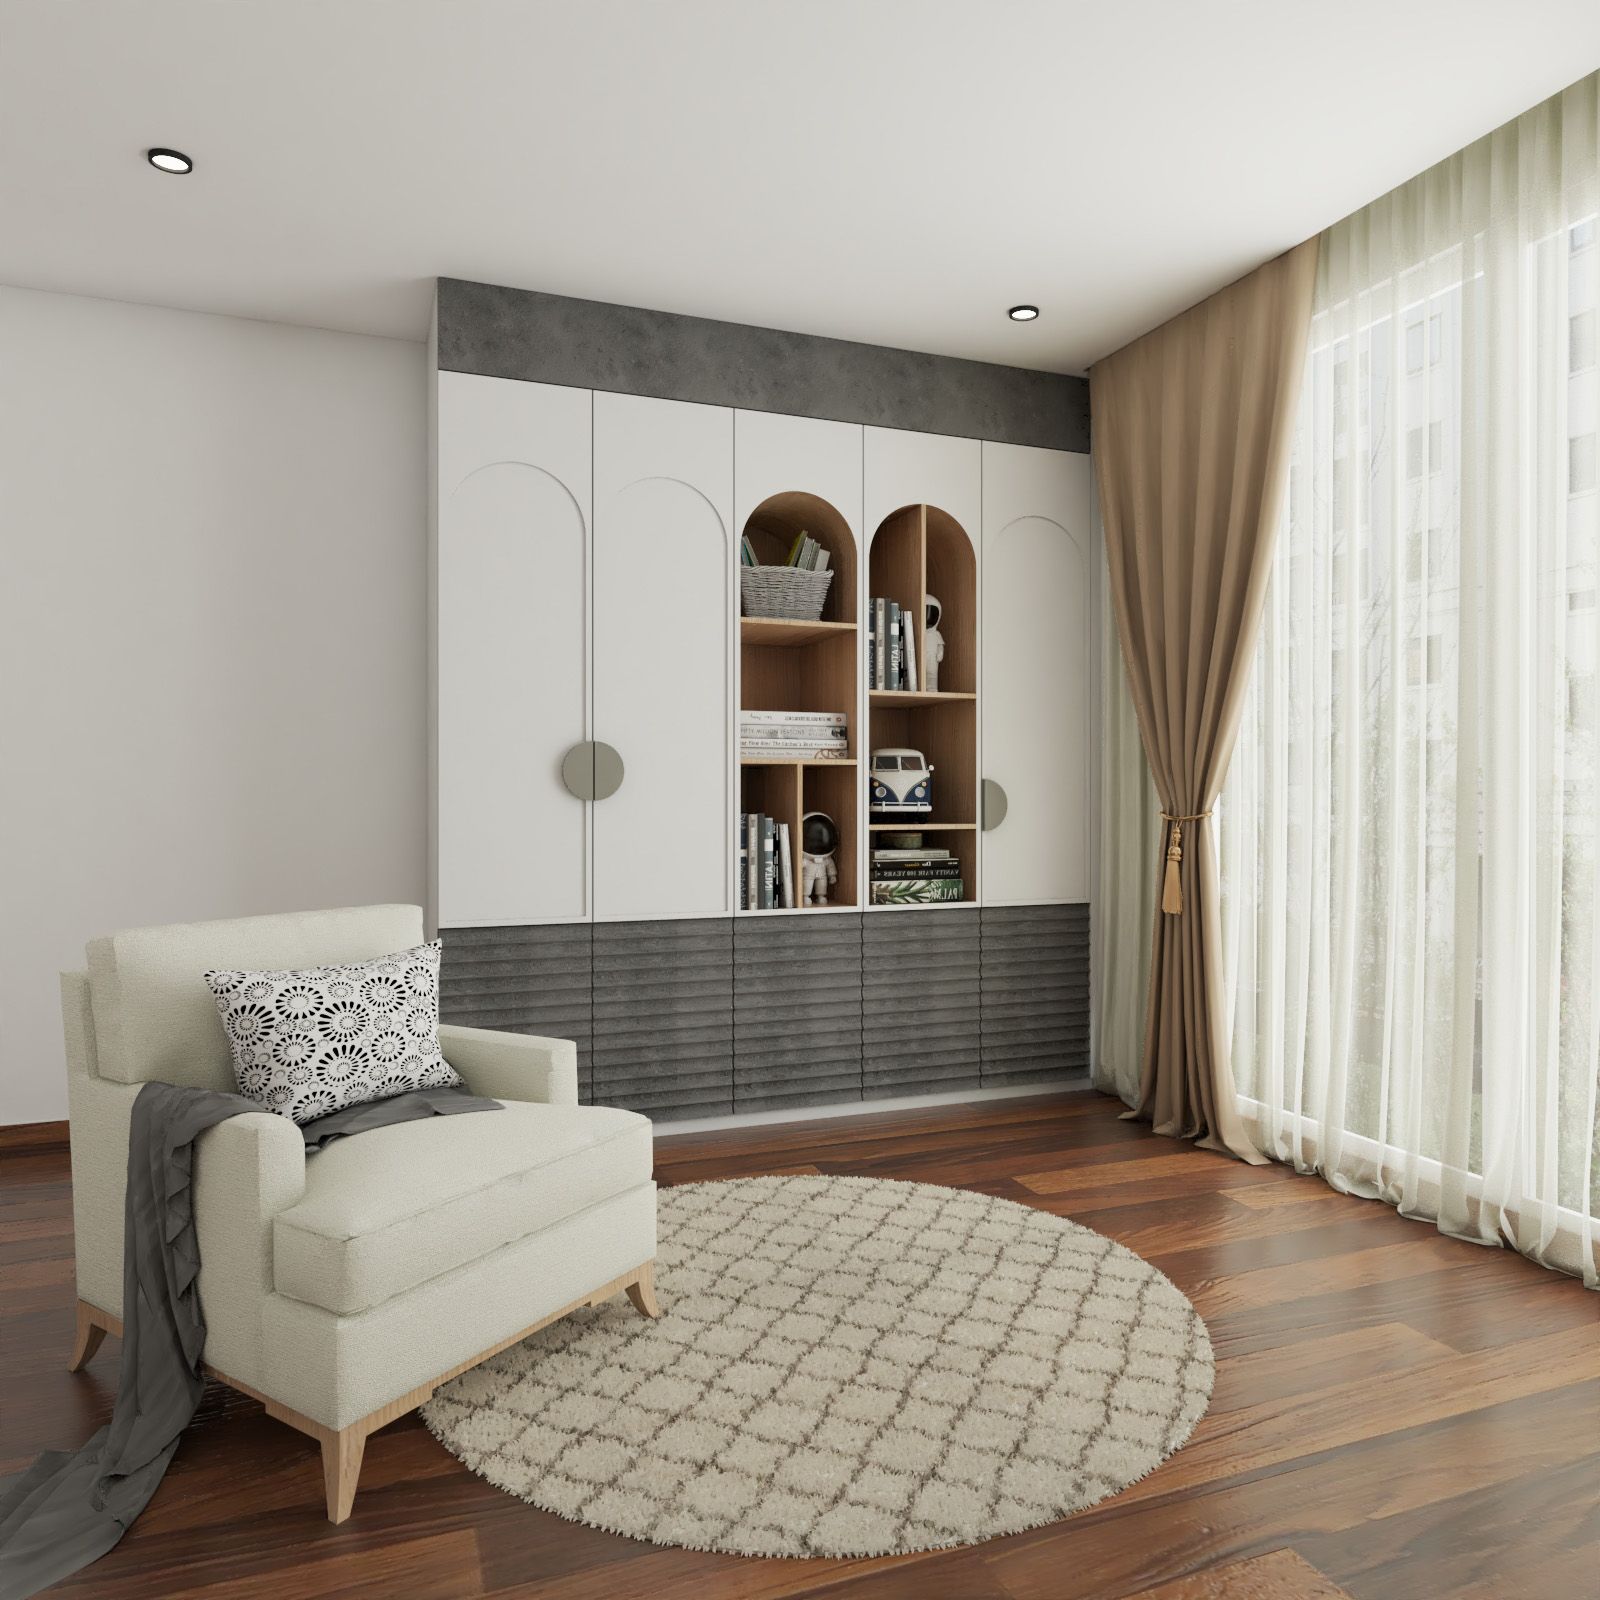 Modern 3-Door Grey And White Swing Wardrobe Design With Wooden Open Shelves